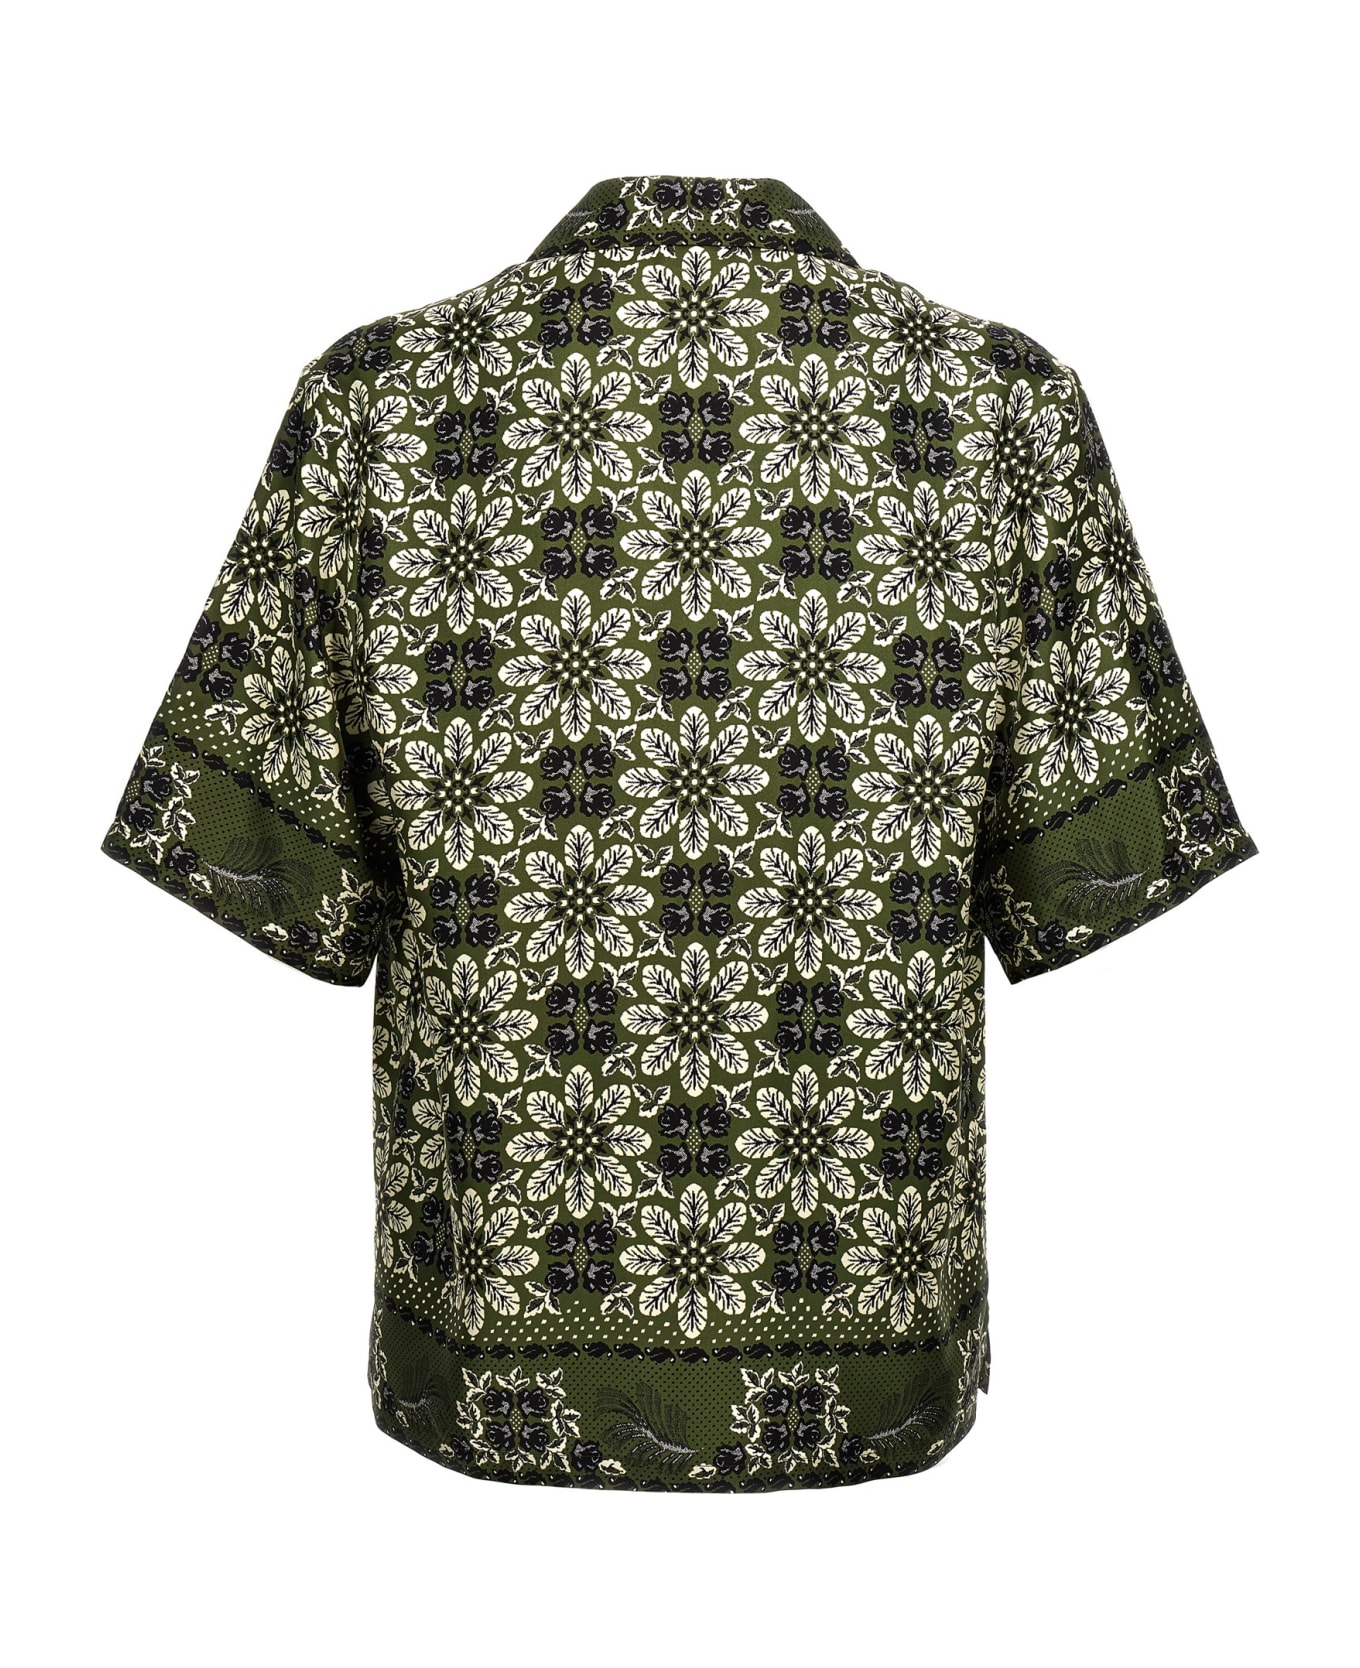 Etro Floral Print Shirt - Green